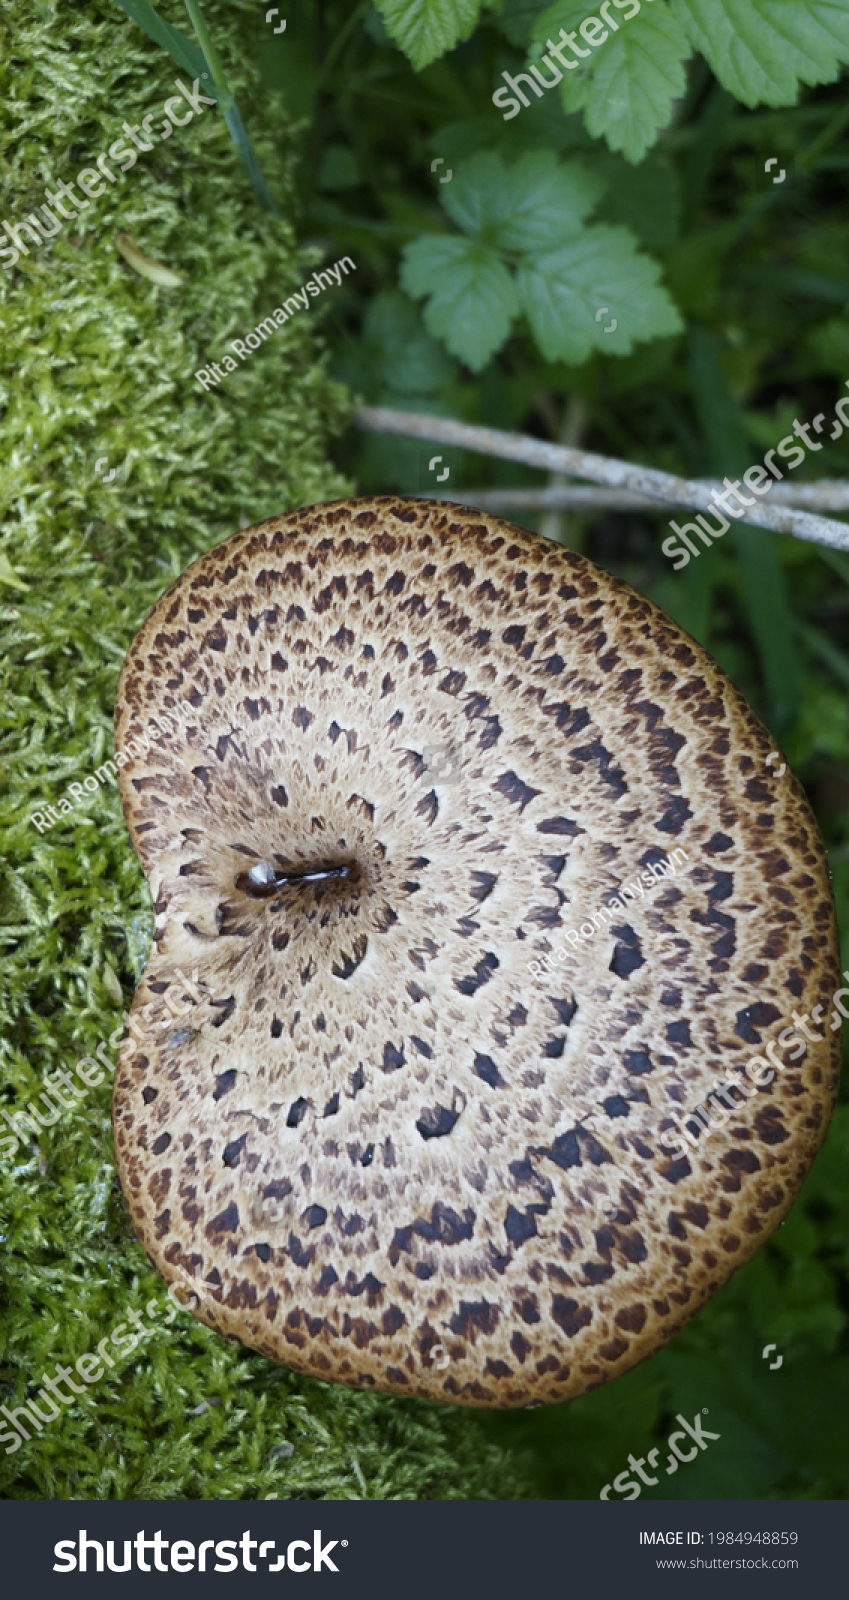 Cerioporus squamosus, dryad's saddle, pheasant's back mushroom. Photo of a mushroom. Polyporus squamosus. basidiomycete bracket fungus. Edible, tree mushroom.  #1984948859